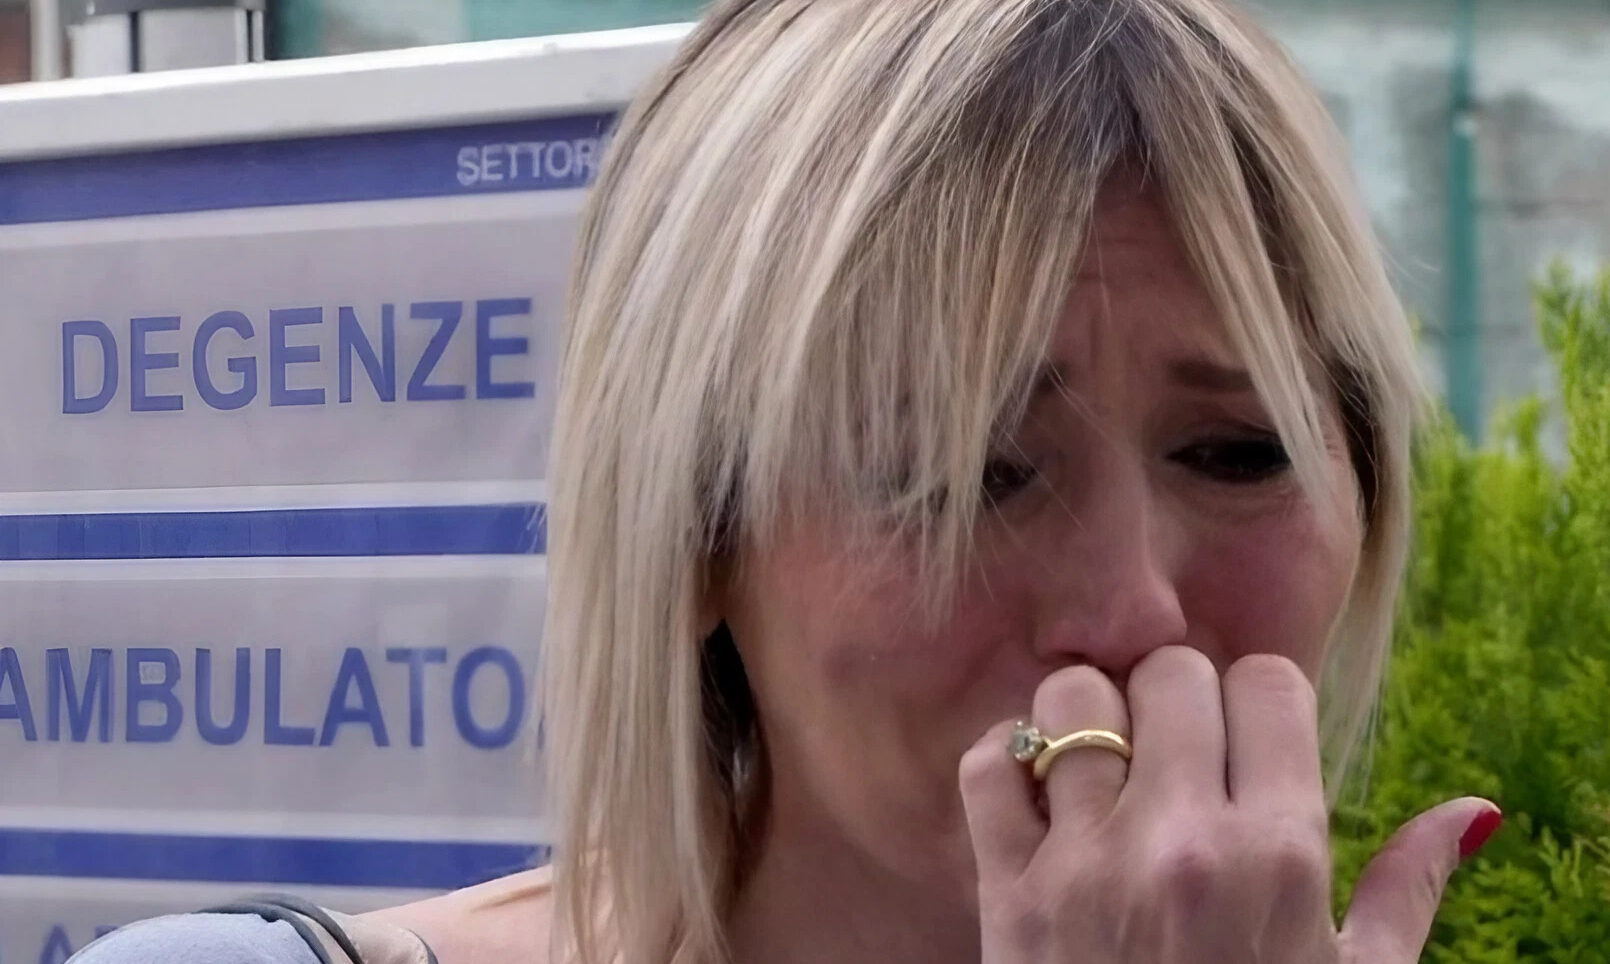 Lara Martinelli in tears